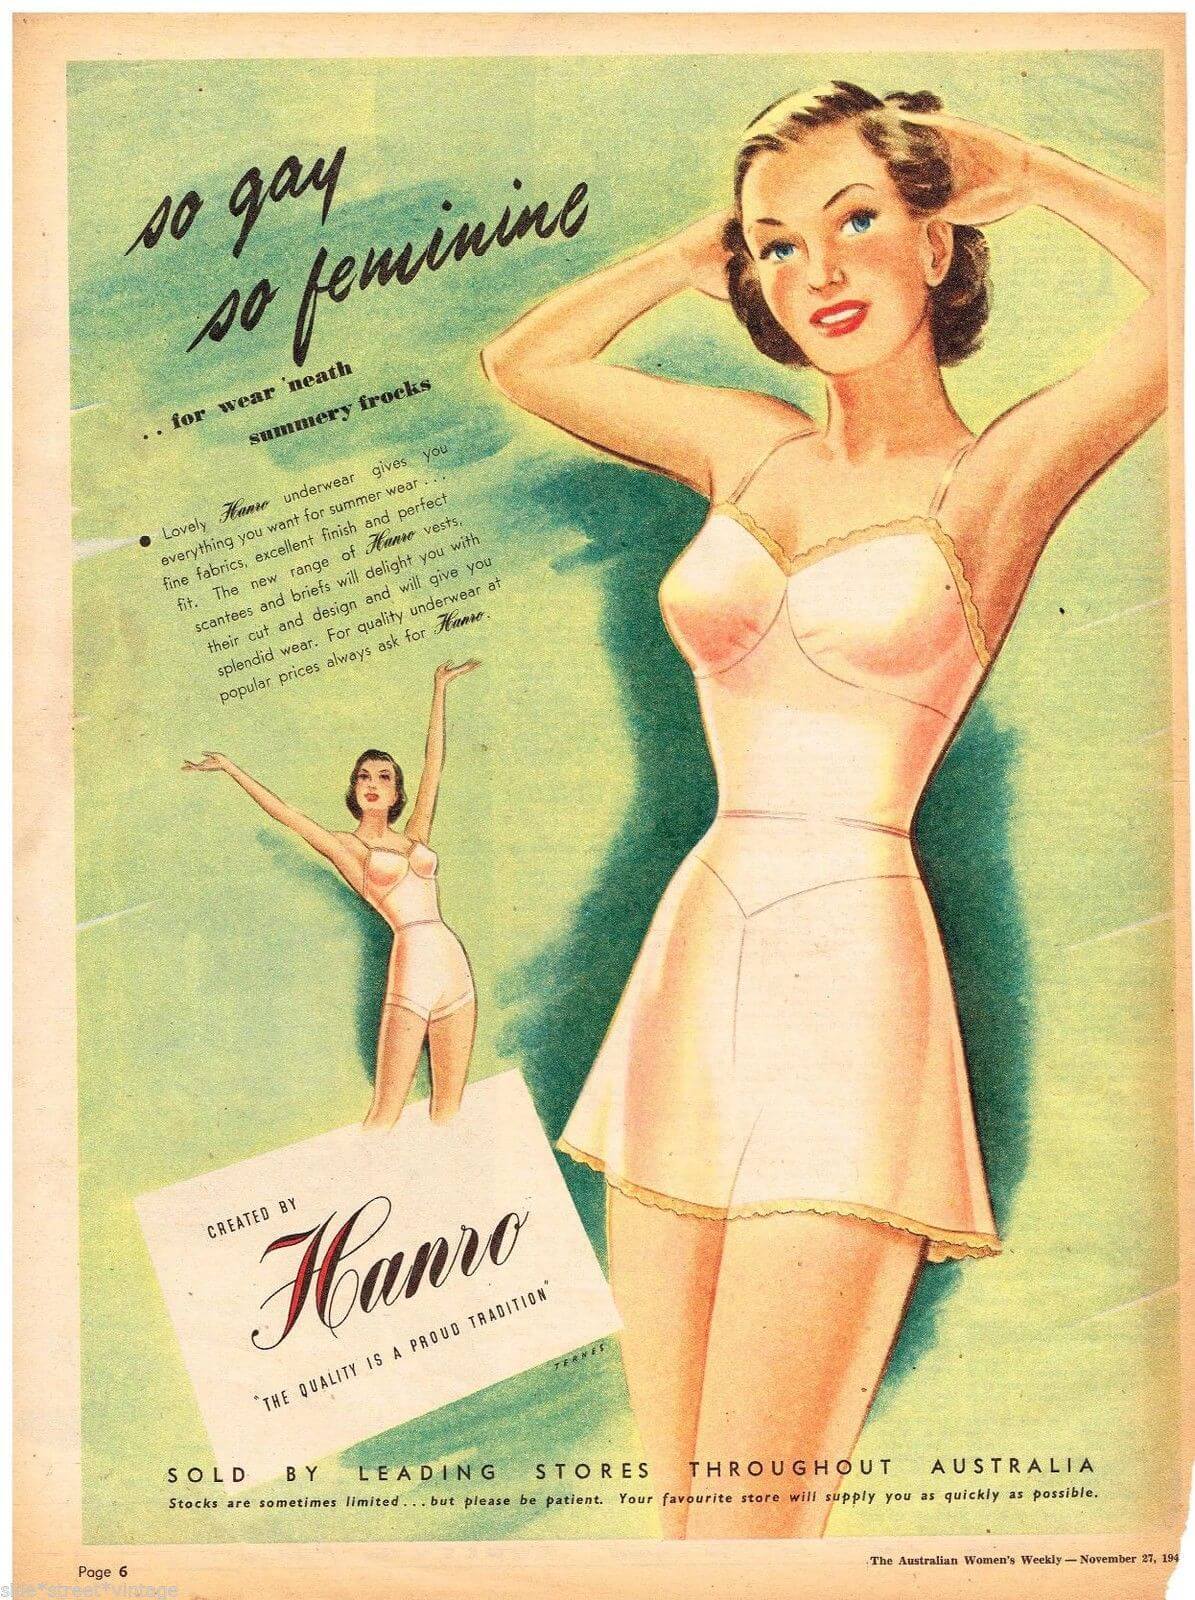 Should you wear vintage undergarments?  Let's talk about vintage lingerie!  